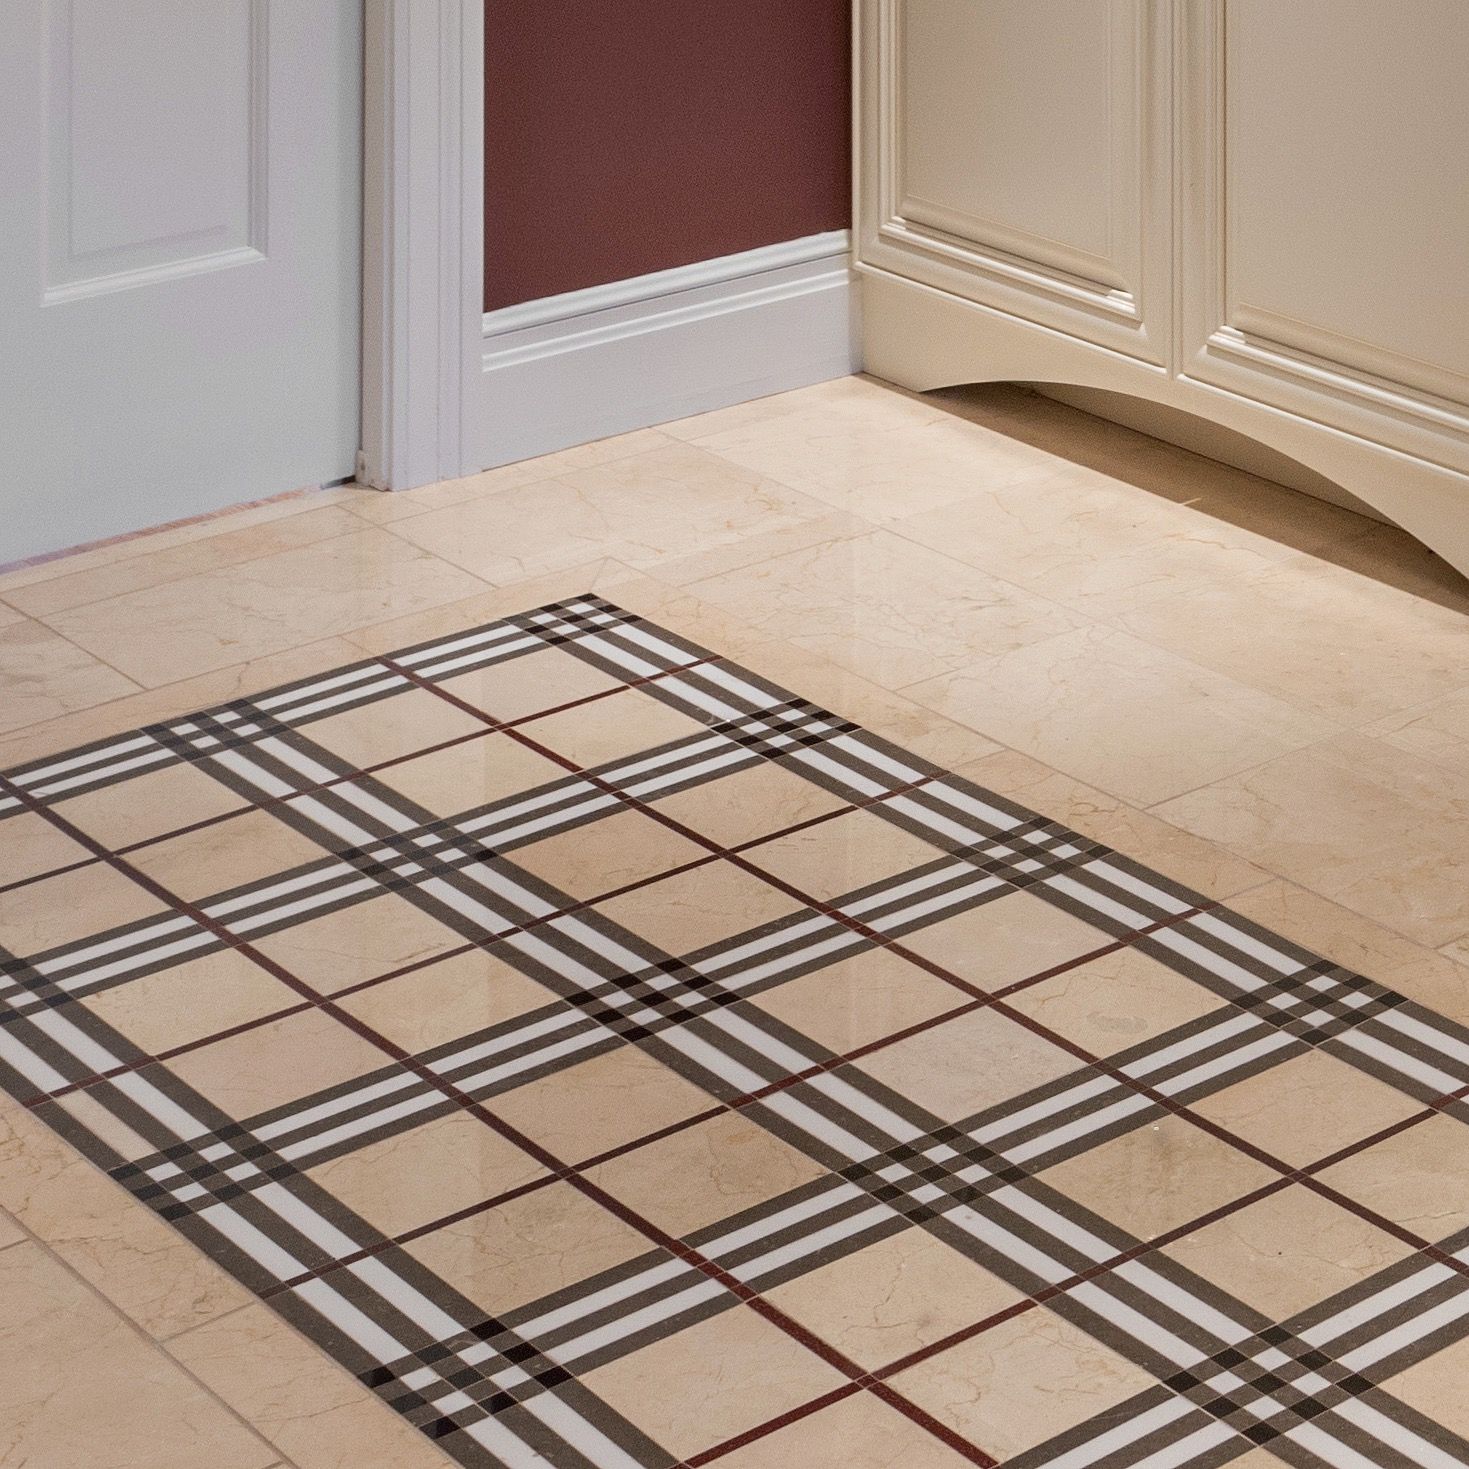 Custom Burberry Inspired Marble Floor (View 4 of 34)